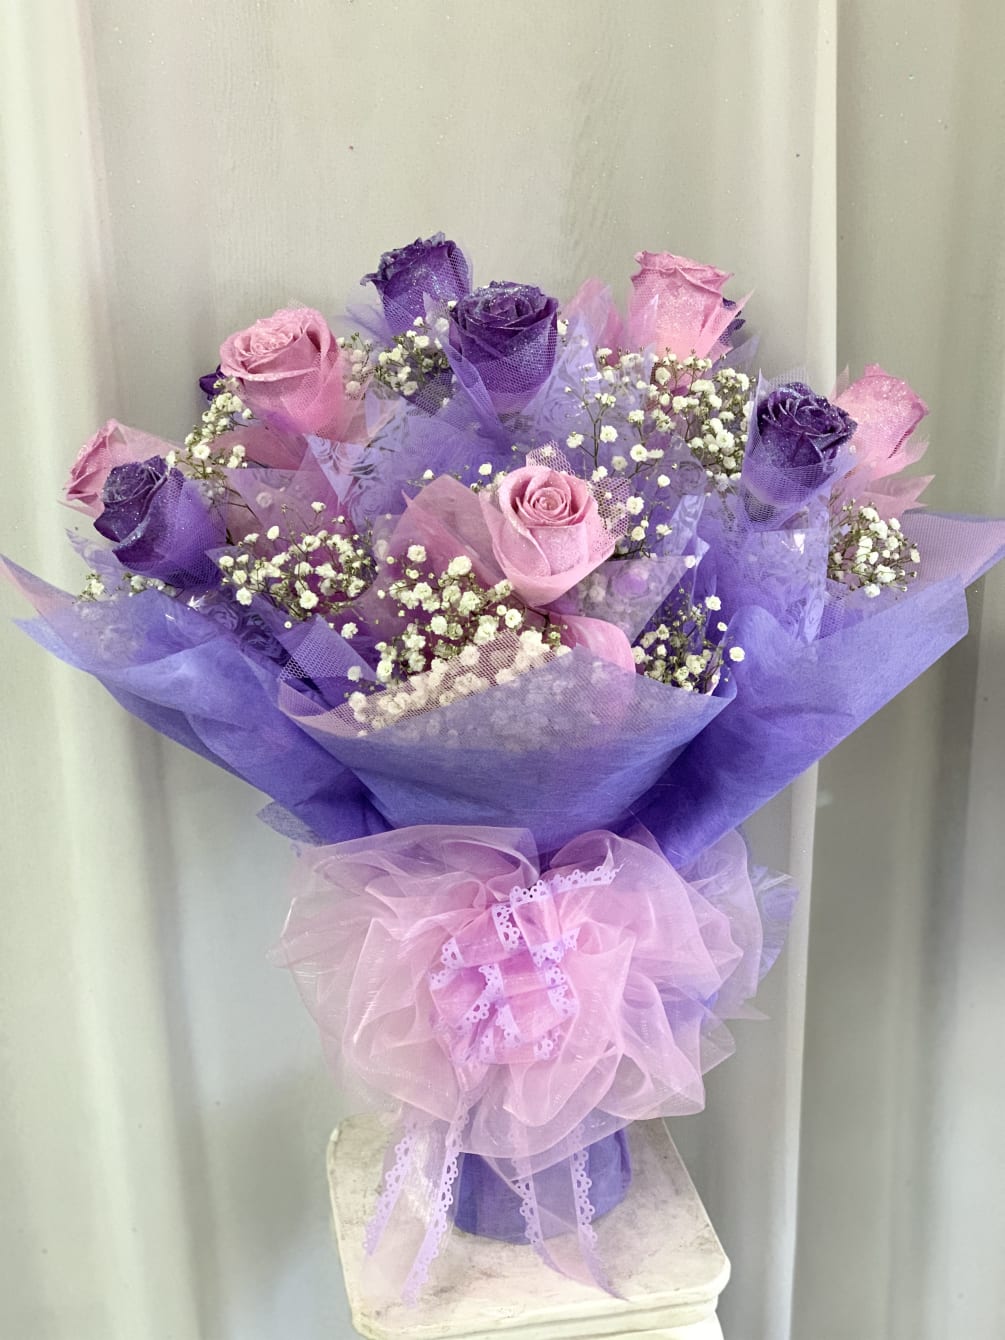 Hong Kong style lavender and purple roses.
1/2 Dozen $135
1 Dozen $205
2 Dozen